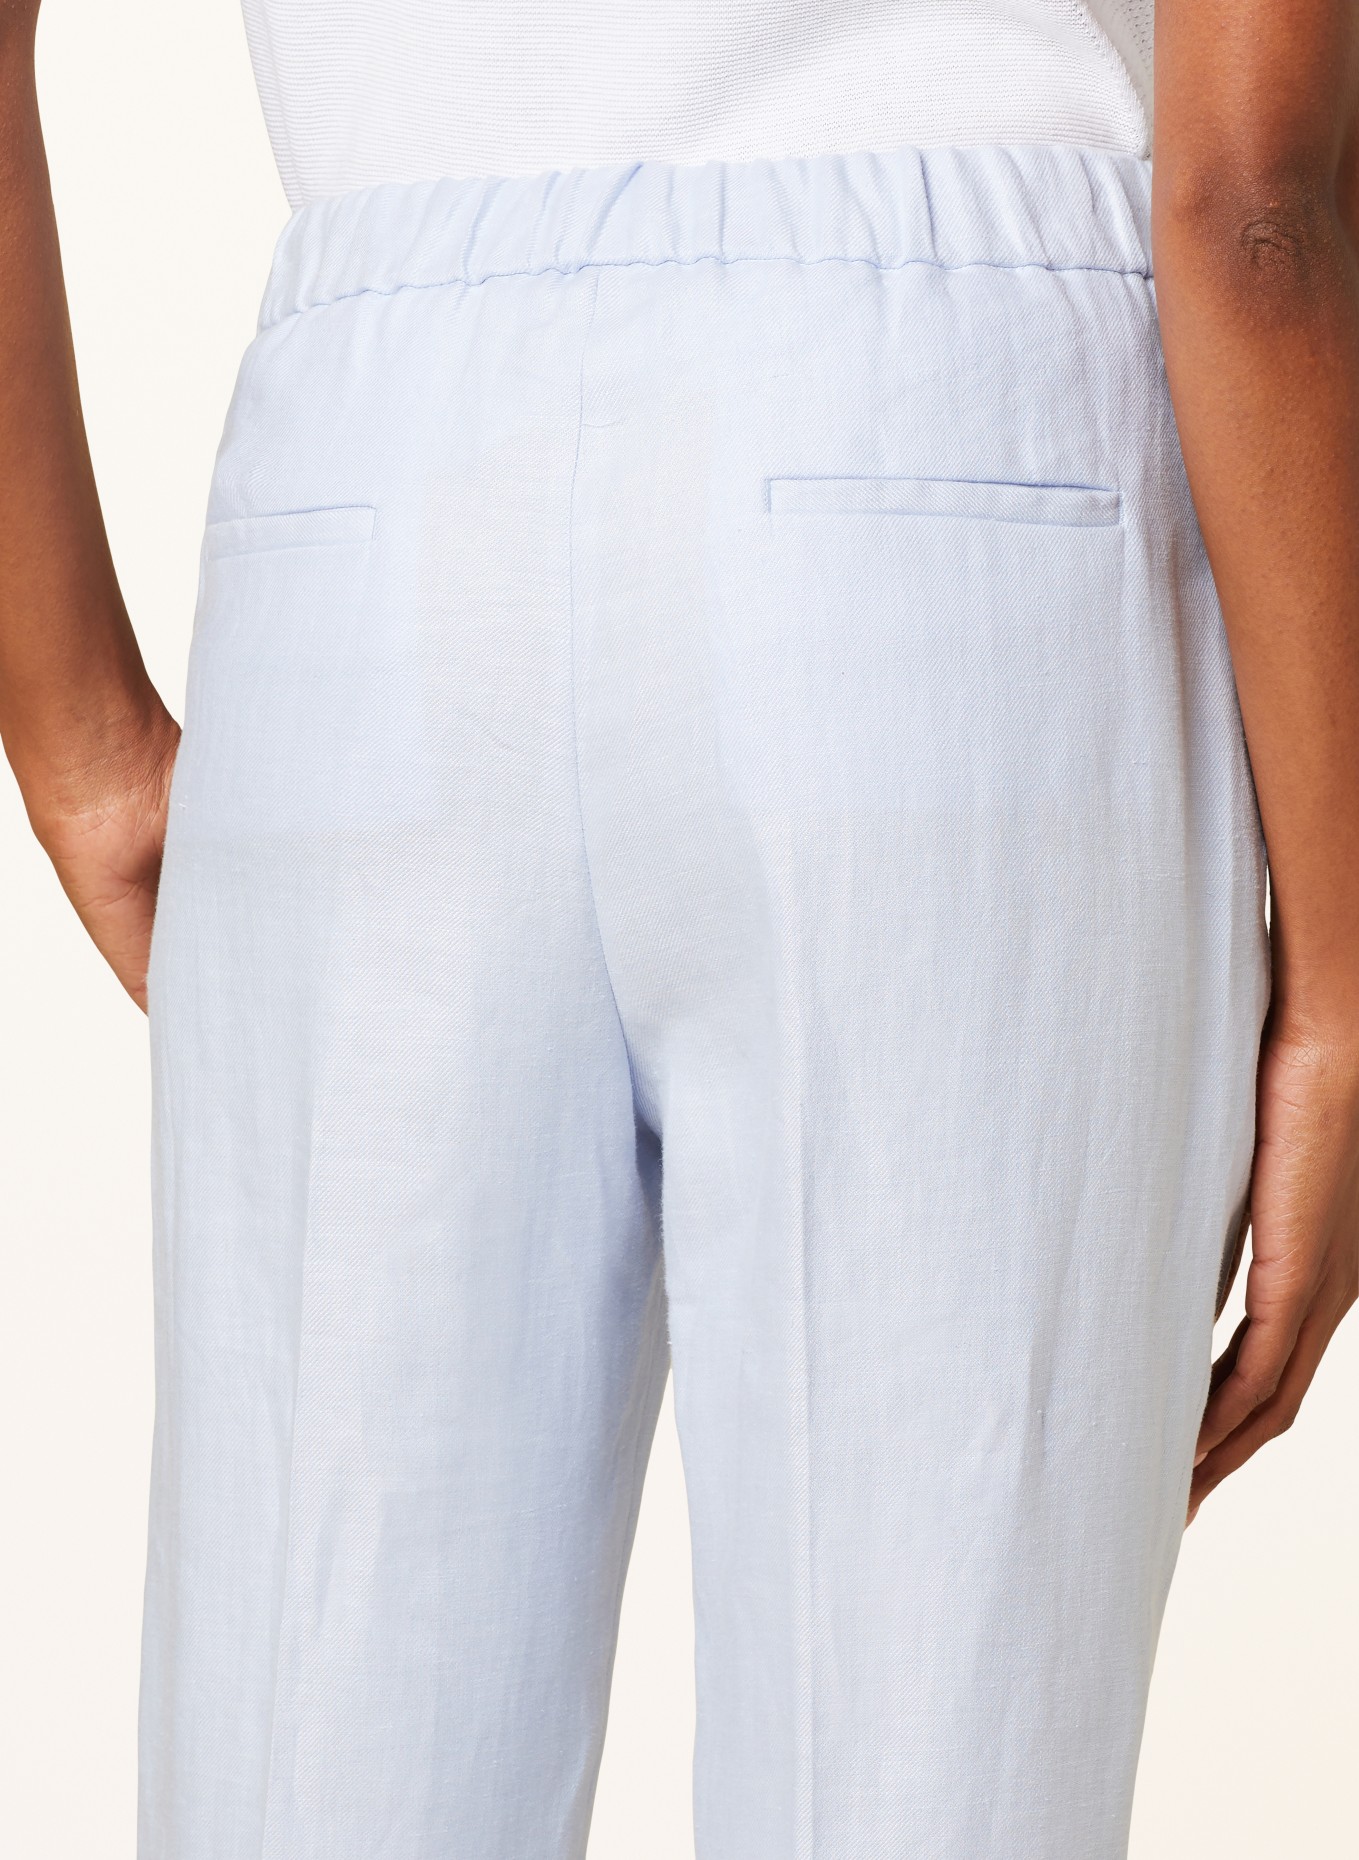 PESERICO EASY 7/8 pants in white